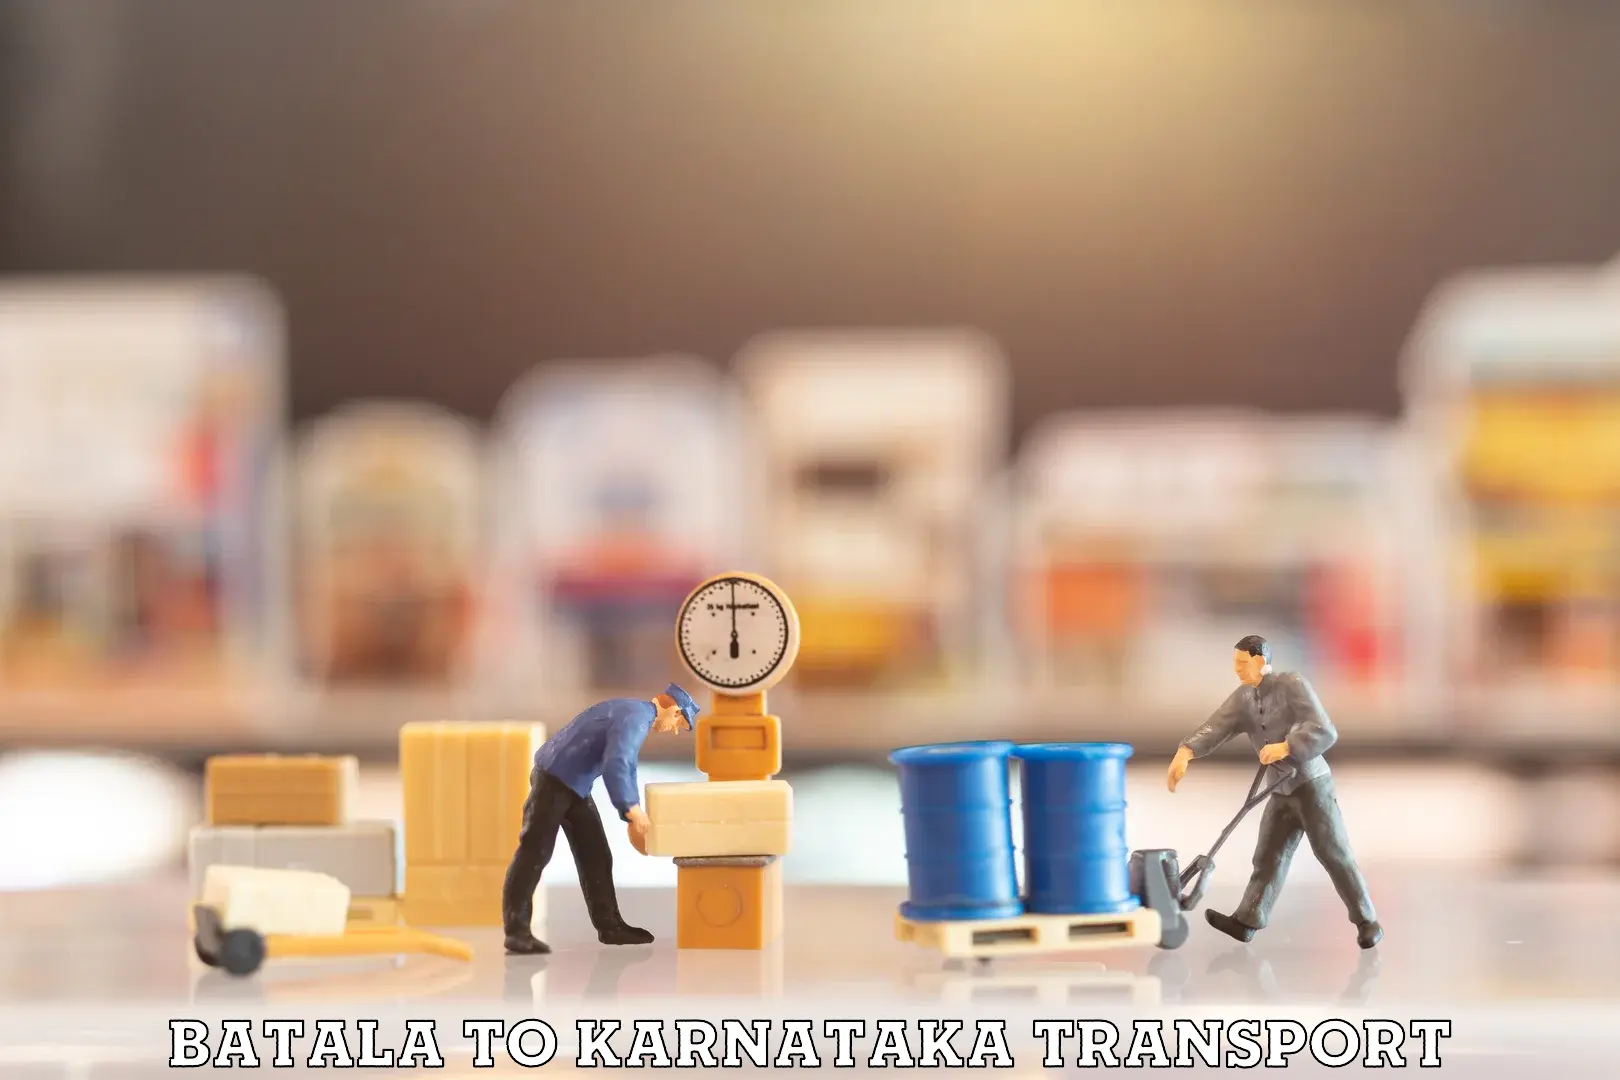 Delivery service Batala to Karnataka